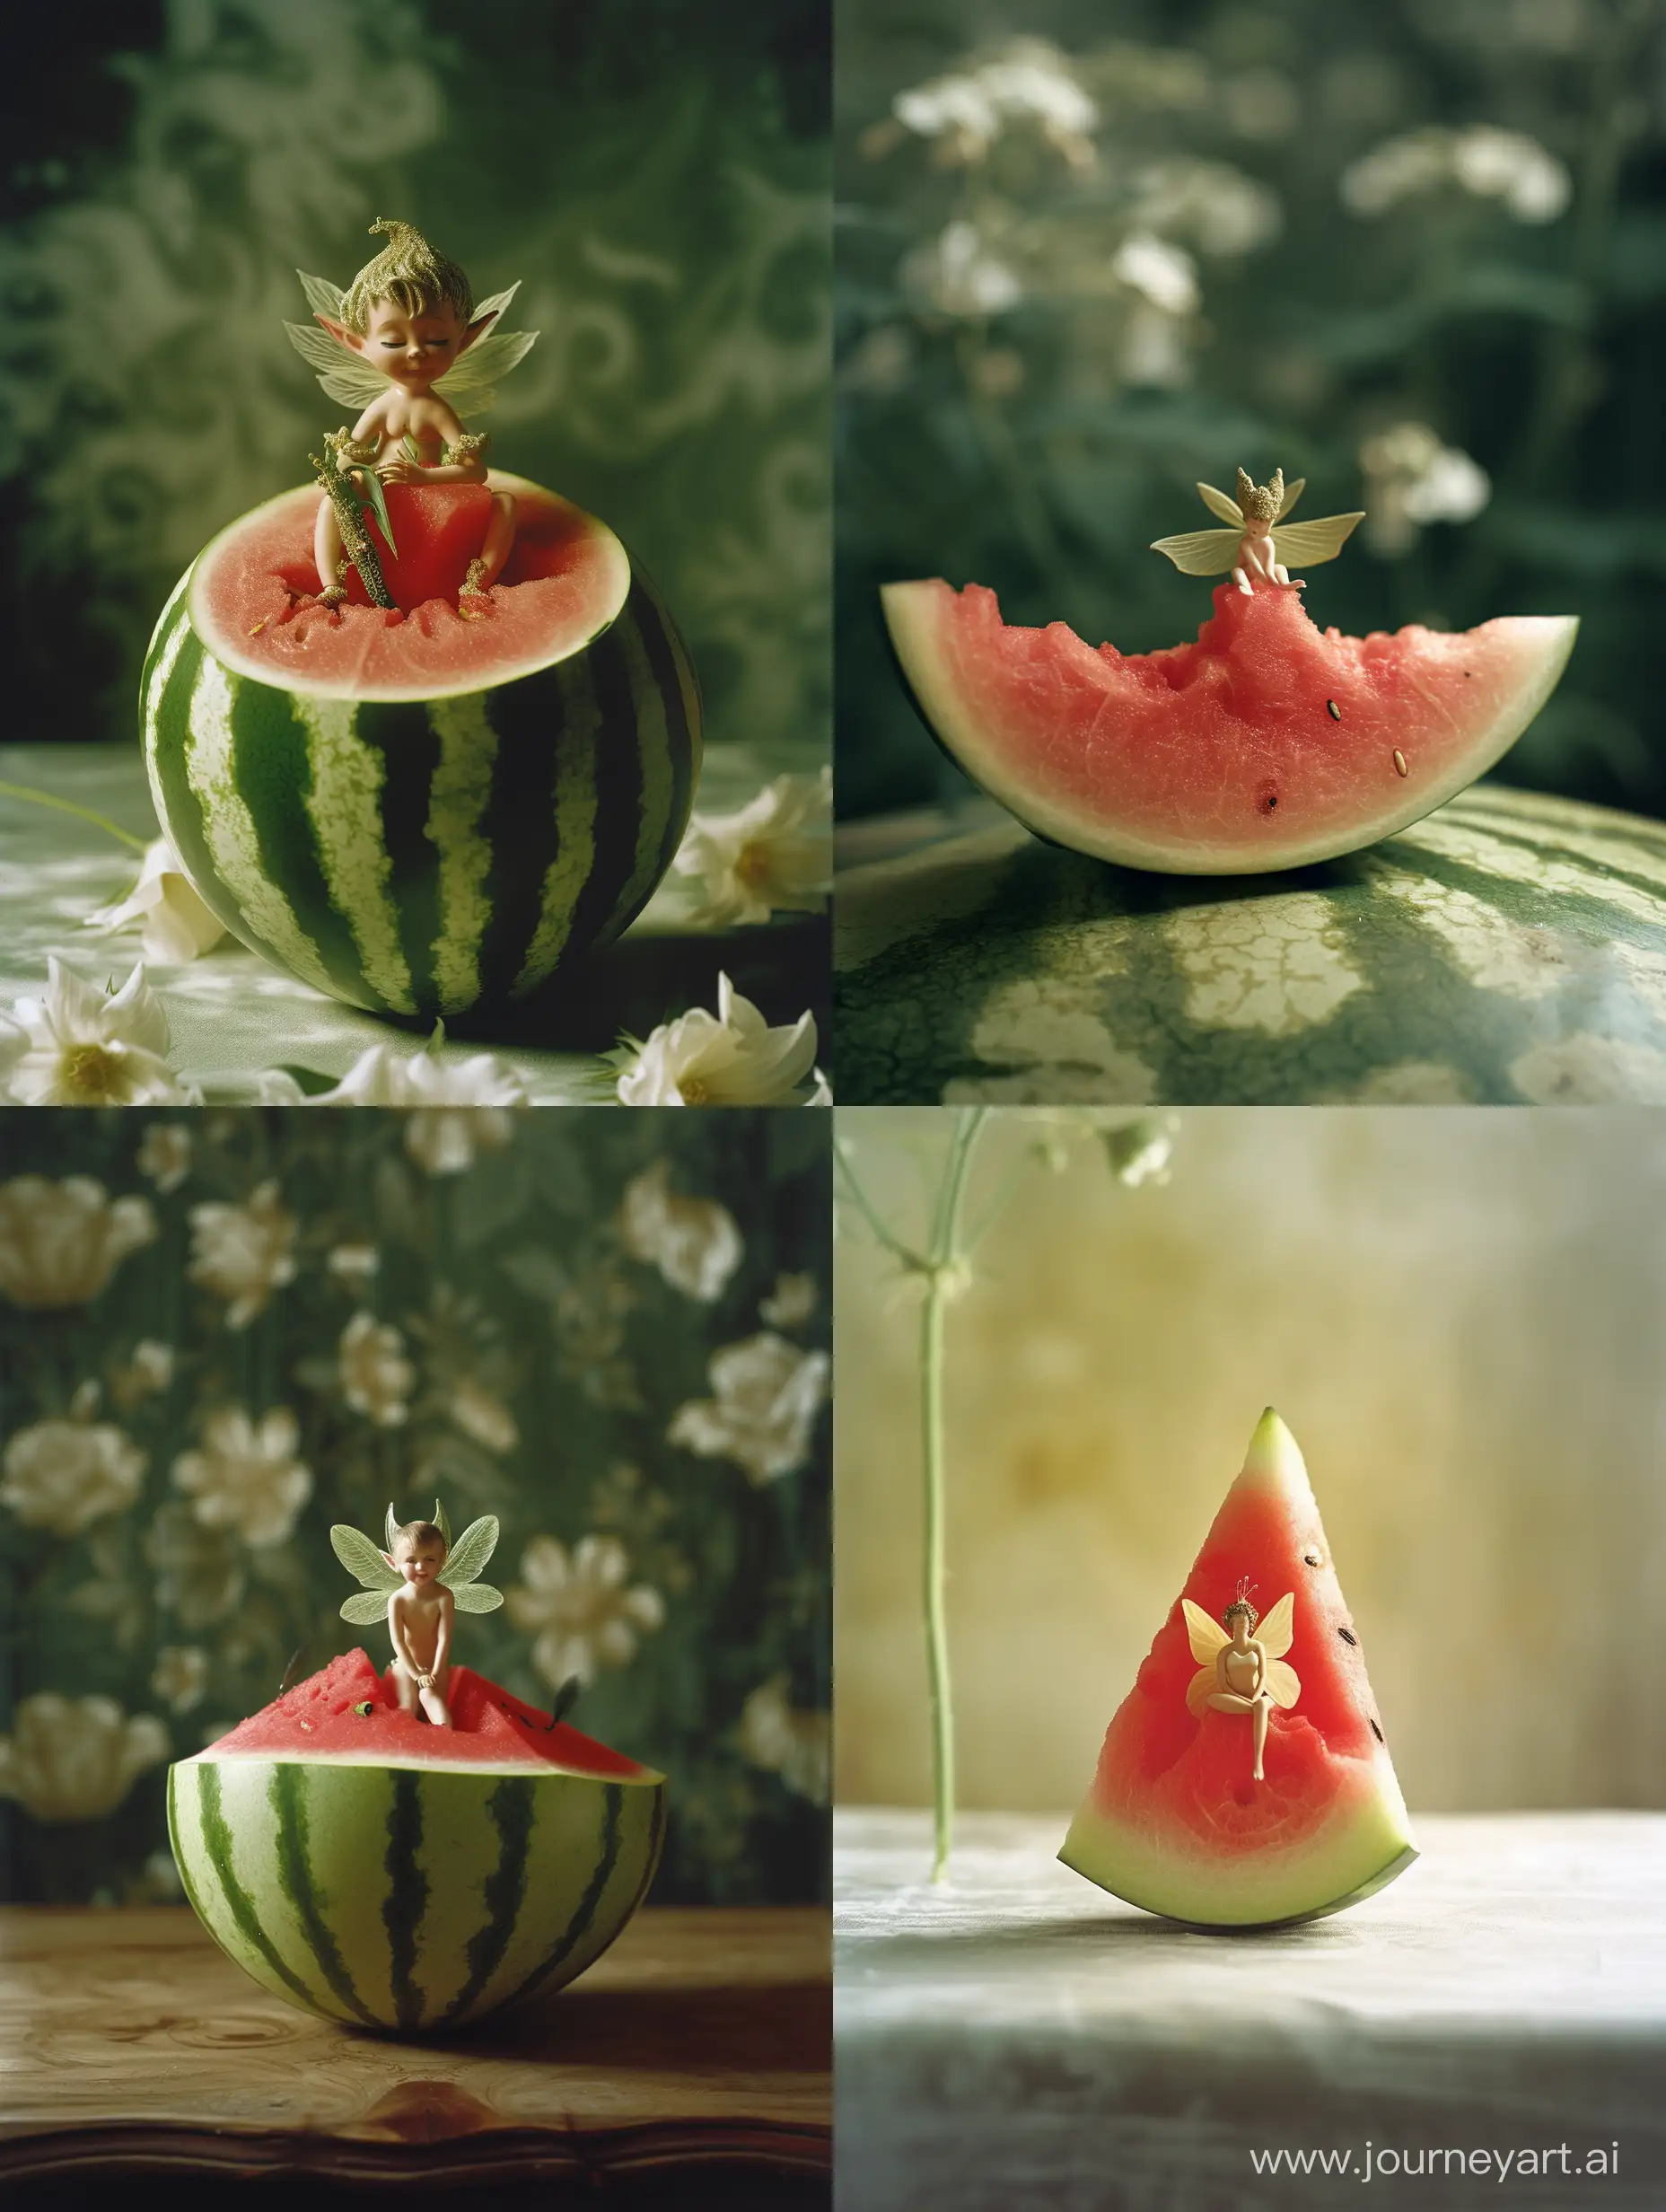 Enchanting-Fairy-in-Symmetrical-Watermelon-Setting